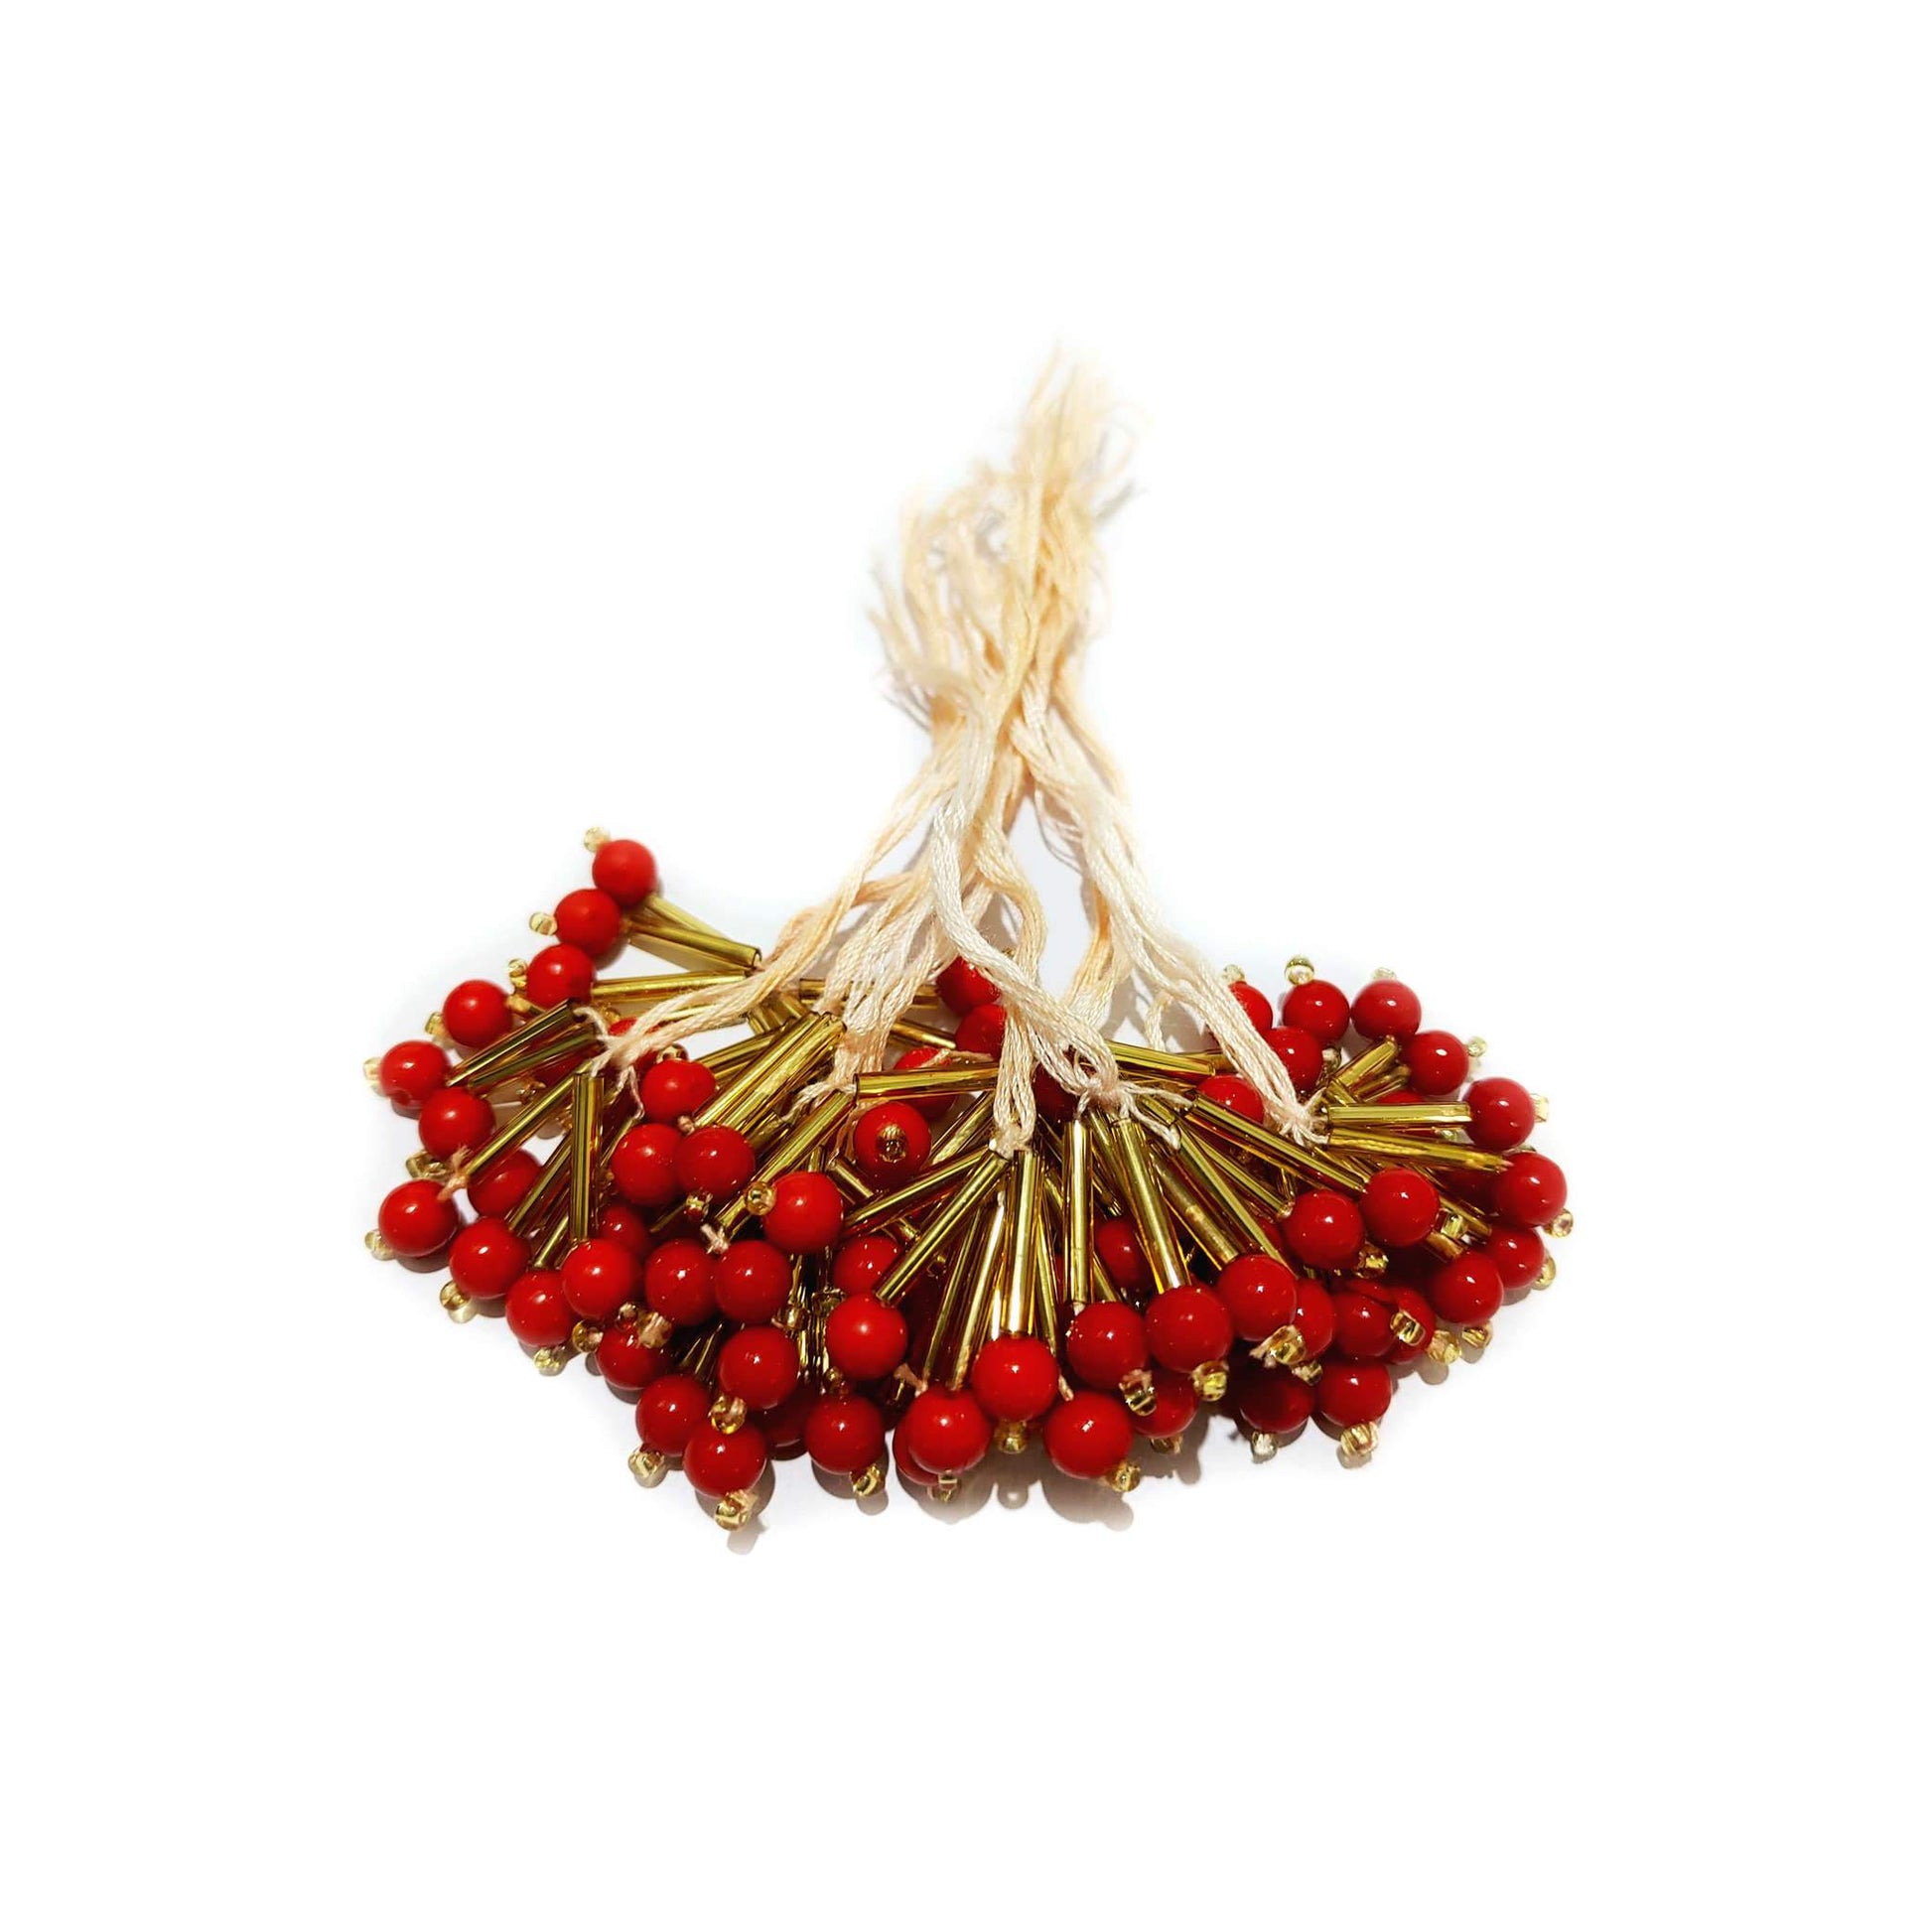 Indian Petals Tubelight with Bead Handmade multi purpose DIY Craft, Jewelry, Fabric Fringe Tassel - Design 801, Red